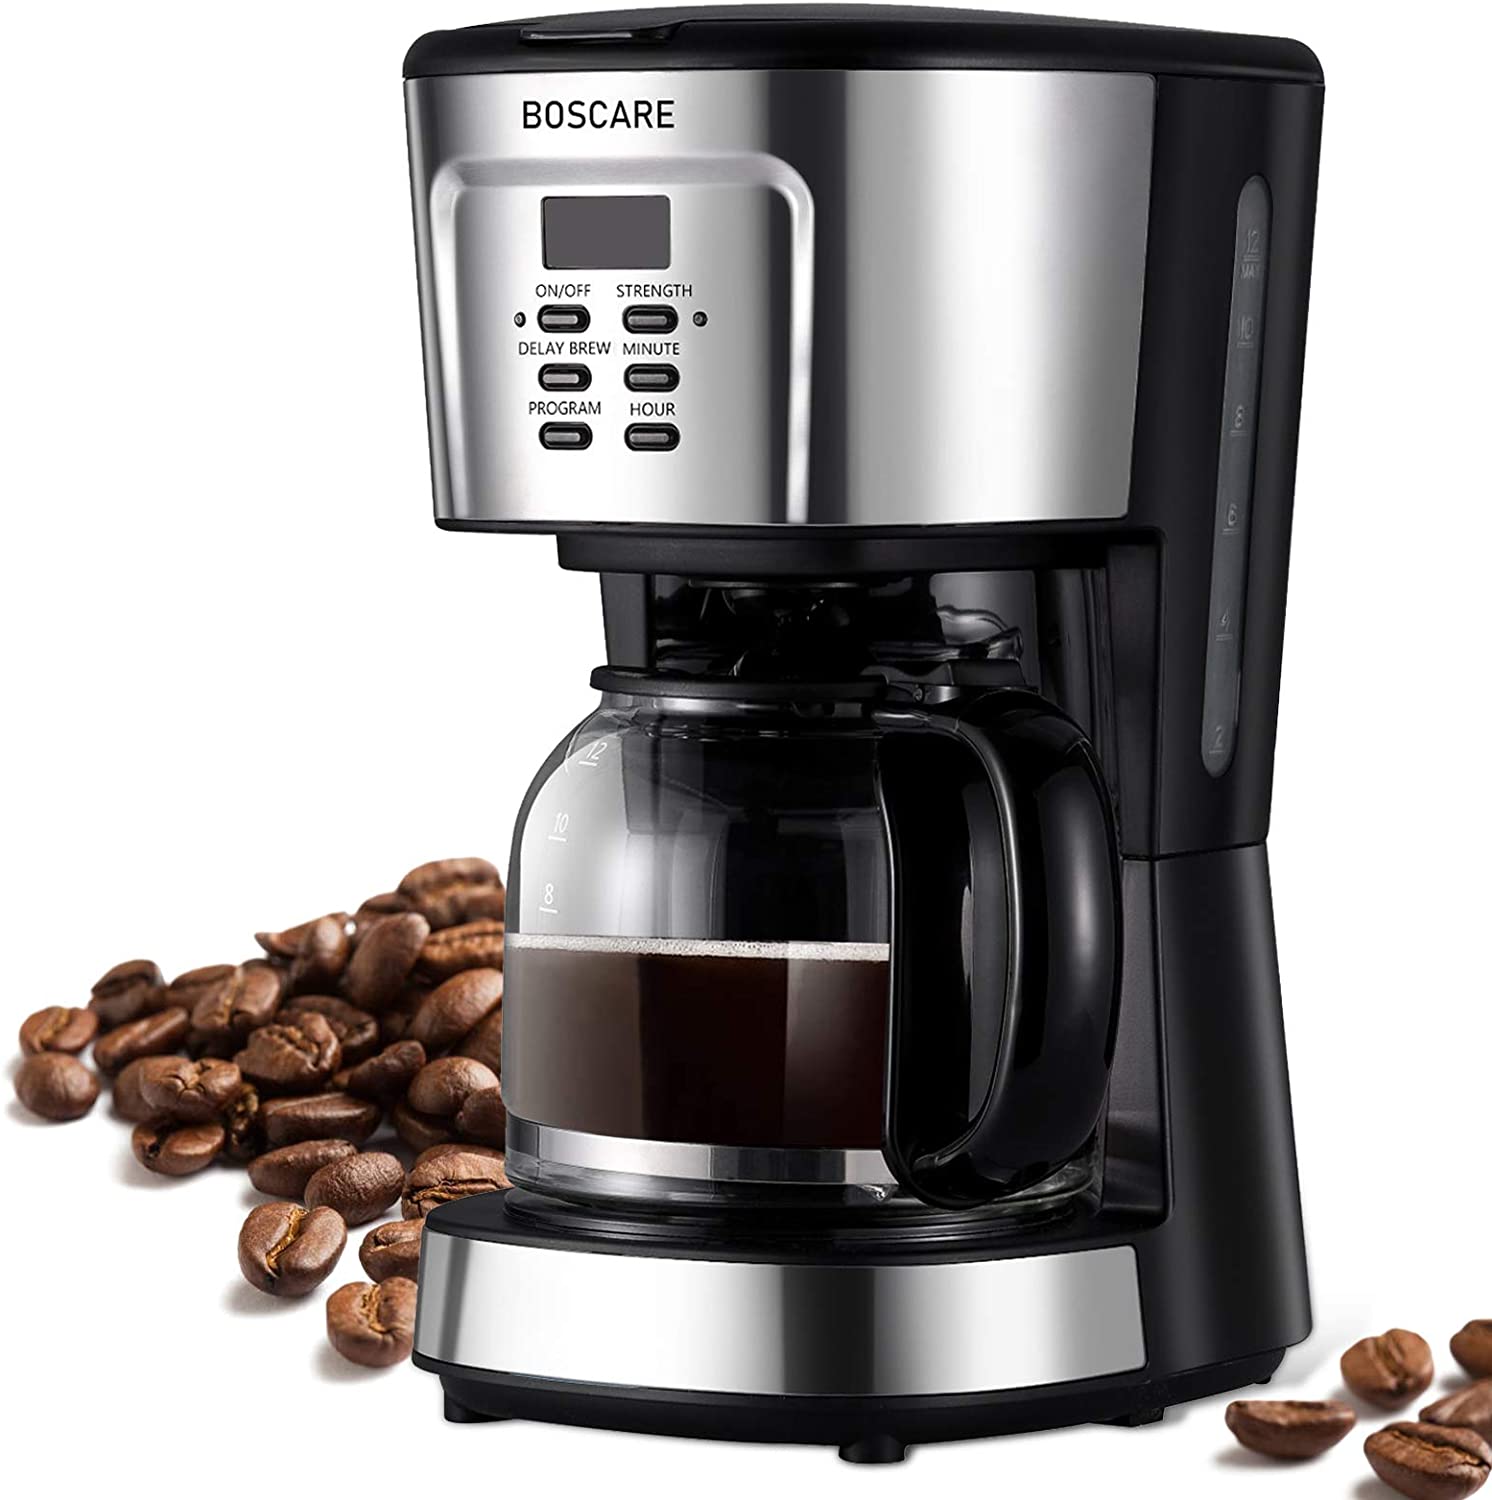 BOSCARE 12-Cup Coffee Maker